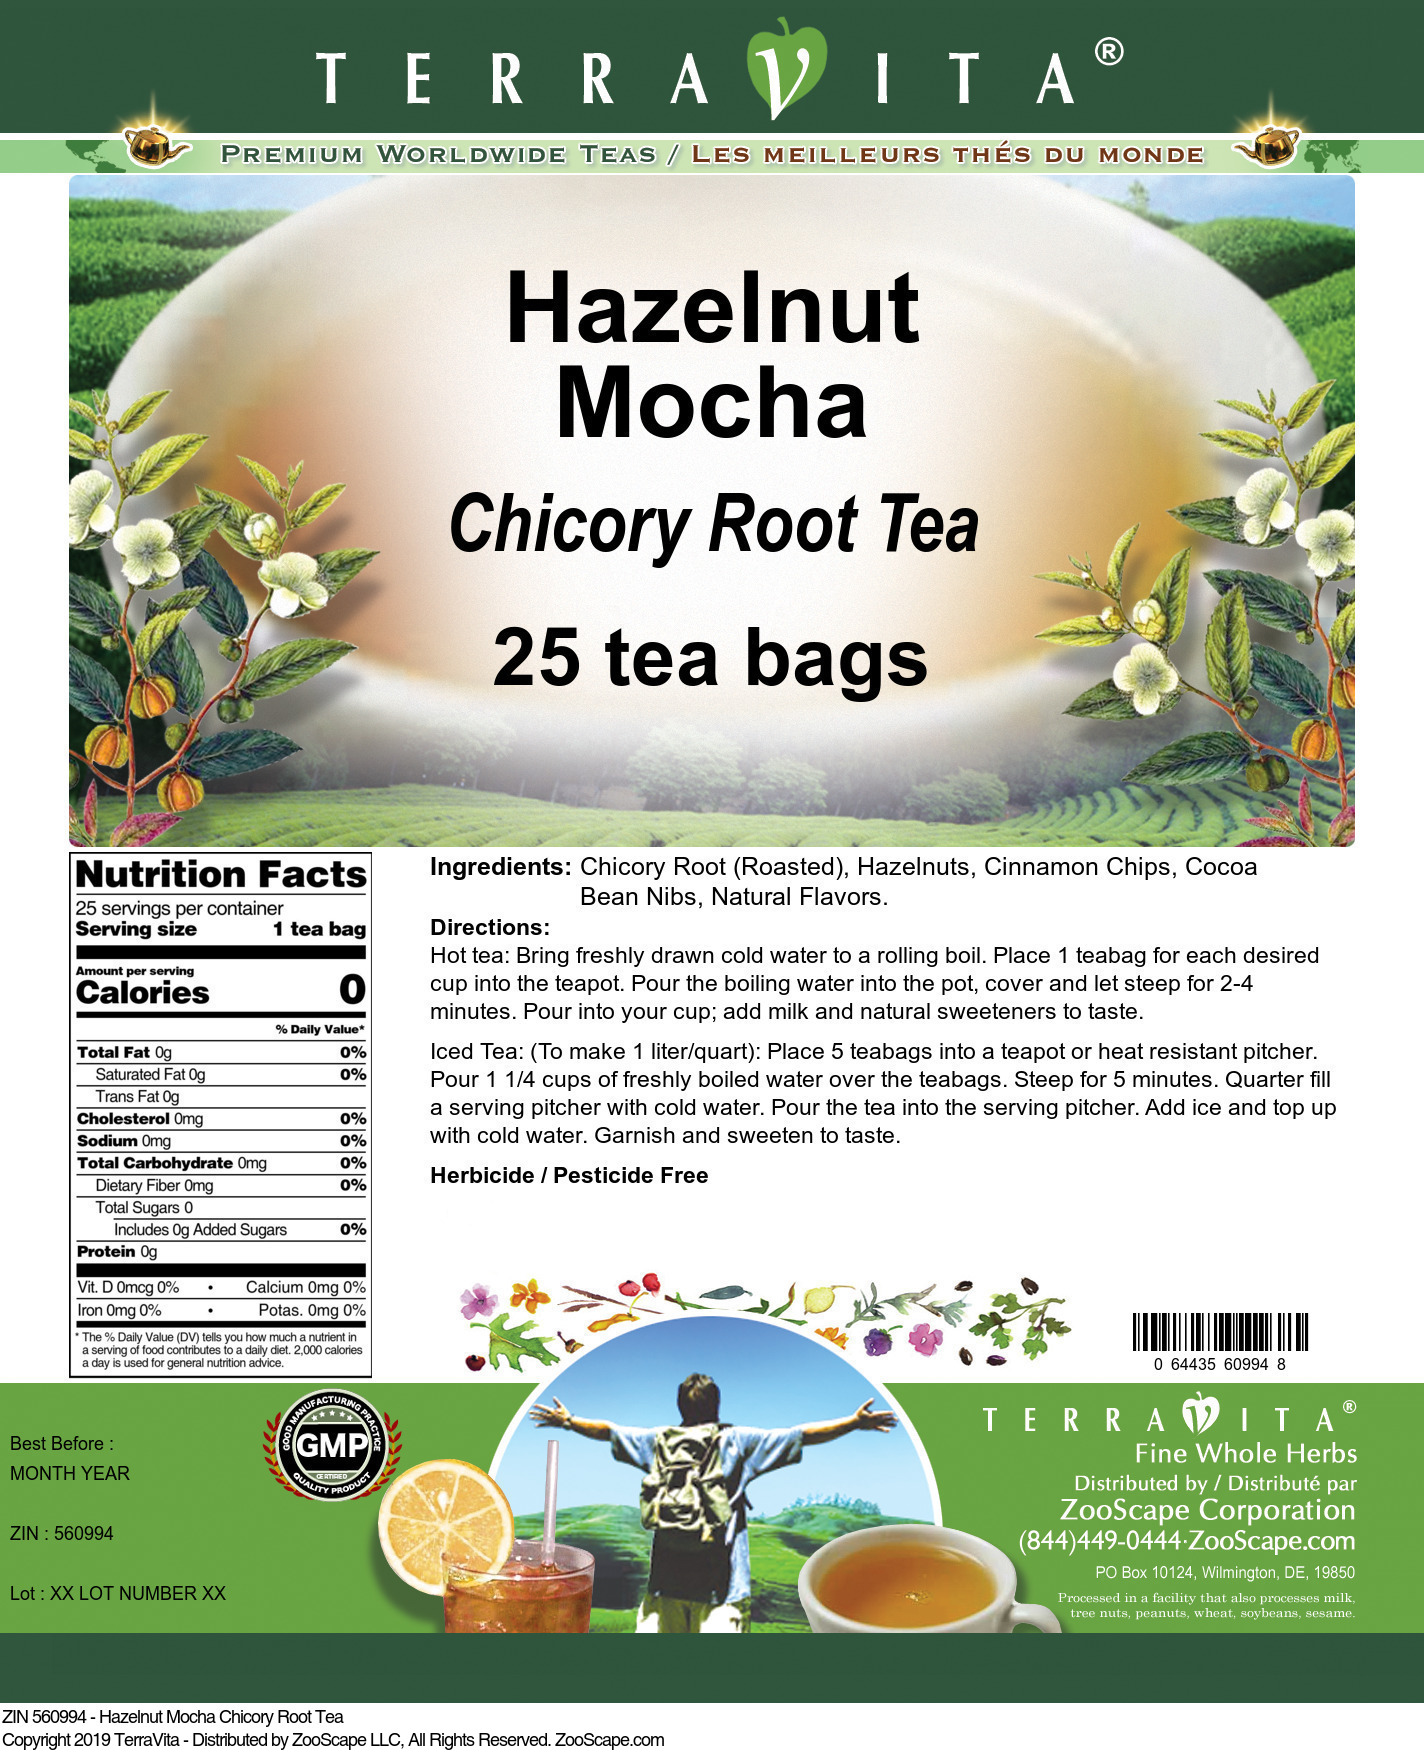 Hazelnut Mocha Chicory Root Tea - Label